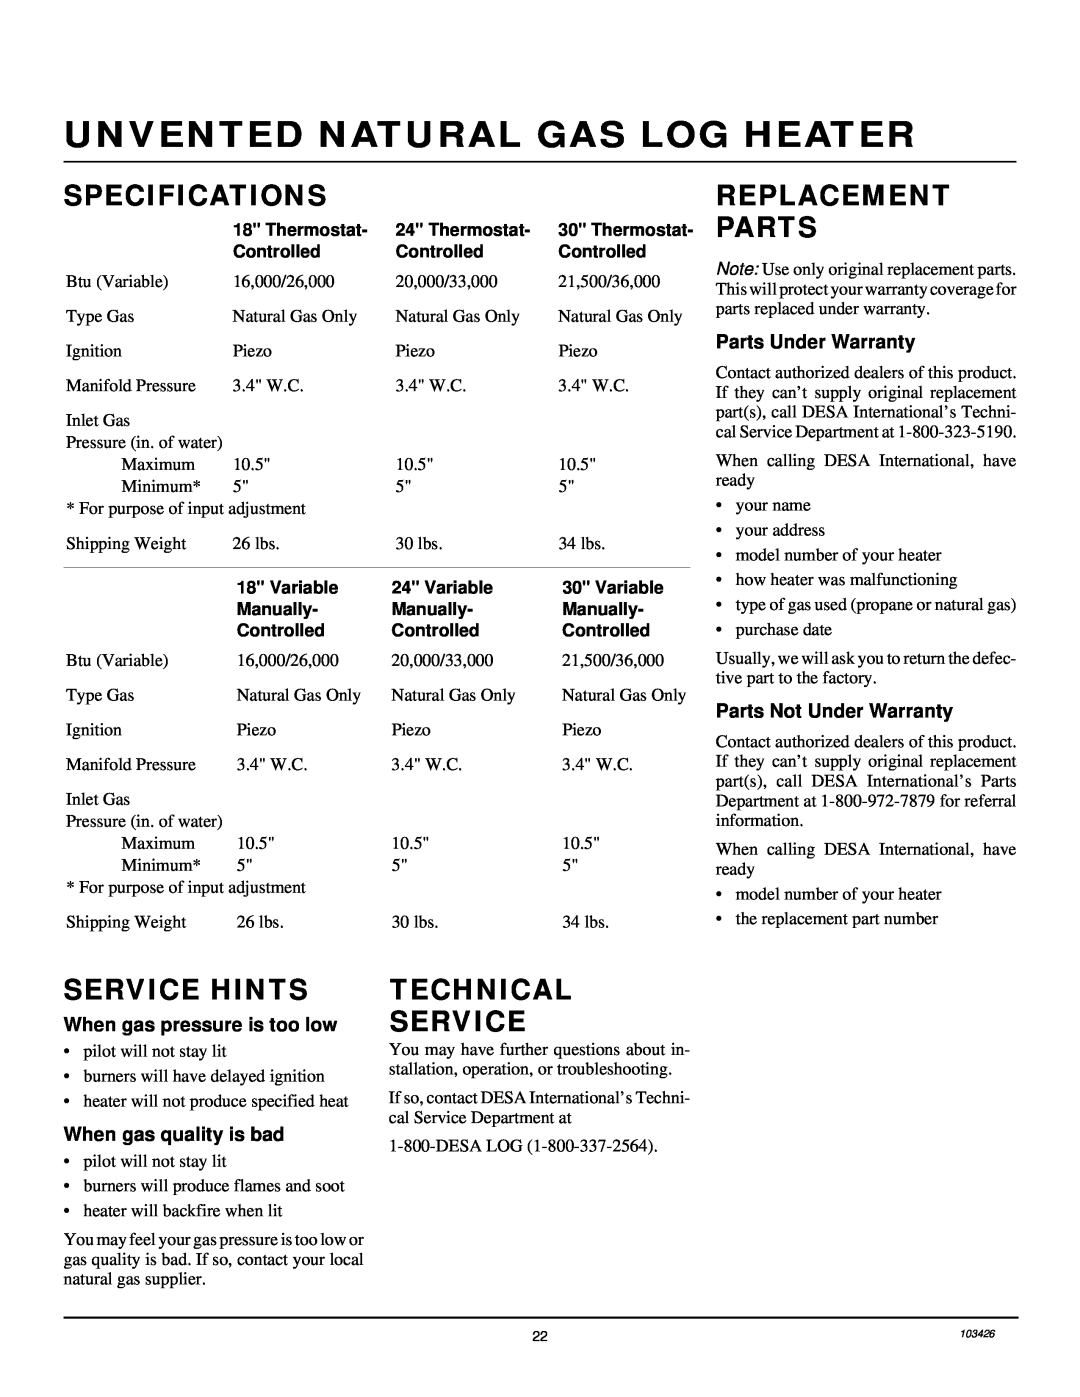 Desa 103426-01 Specifications, Replacement Parts, Service Hints, Technical Service, Parts Under Warranty 